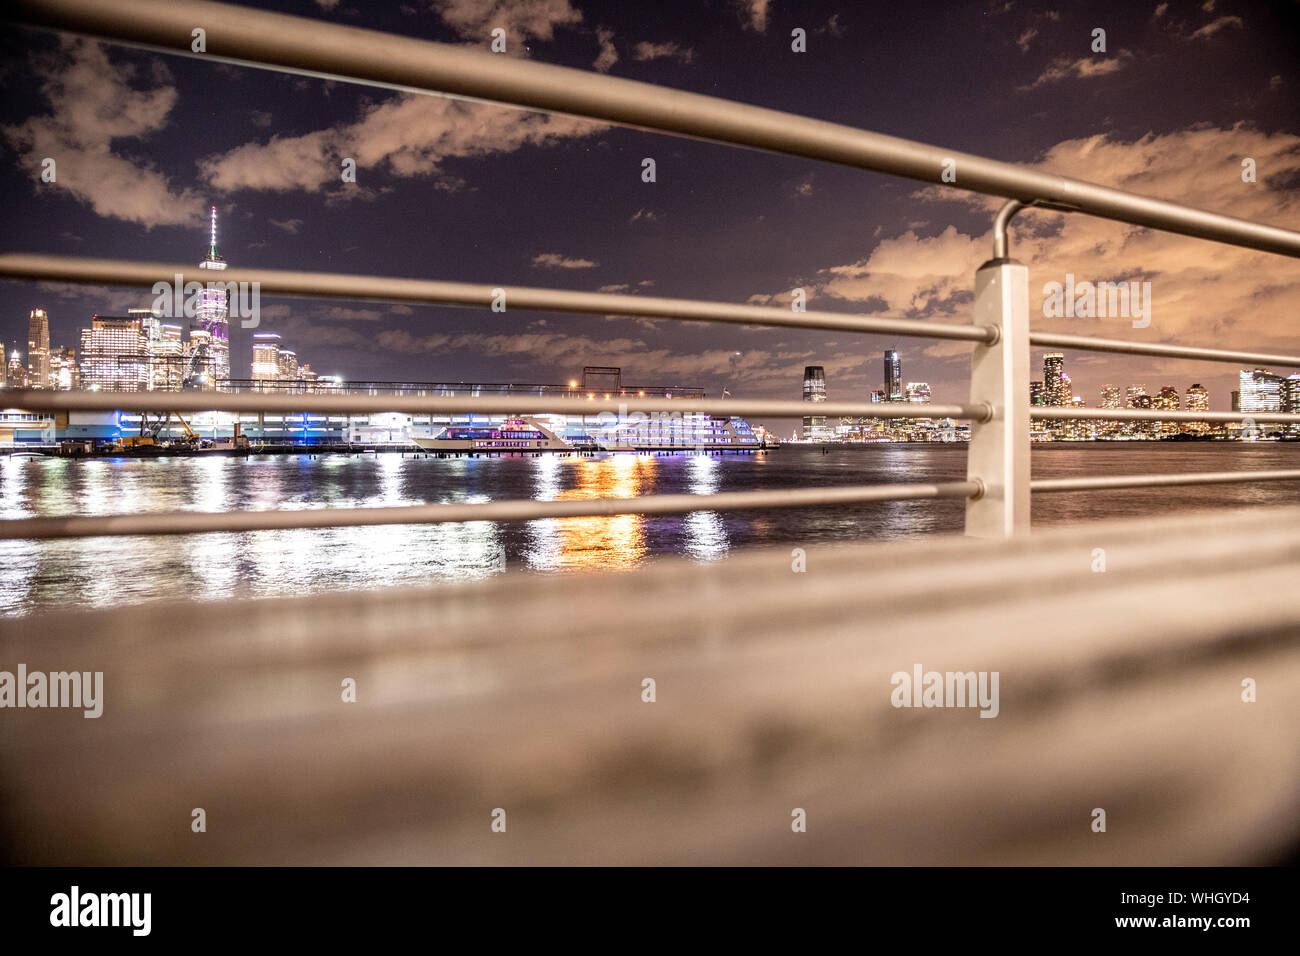 New York City view of skyline seen through railing on pier Stock Photo